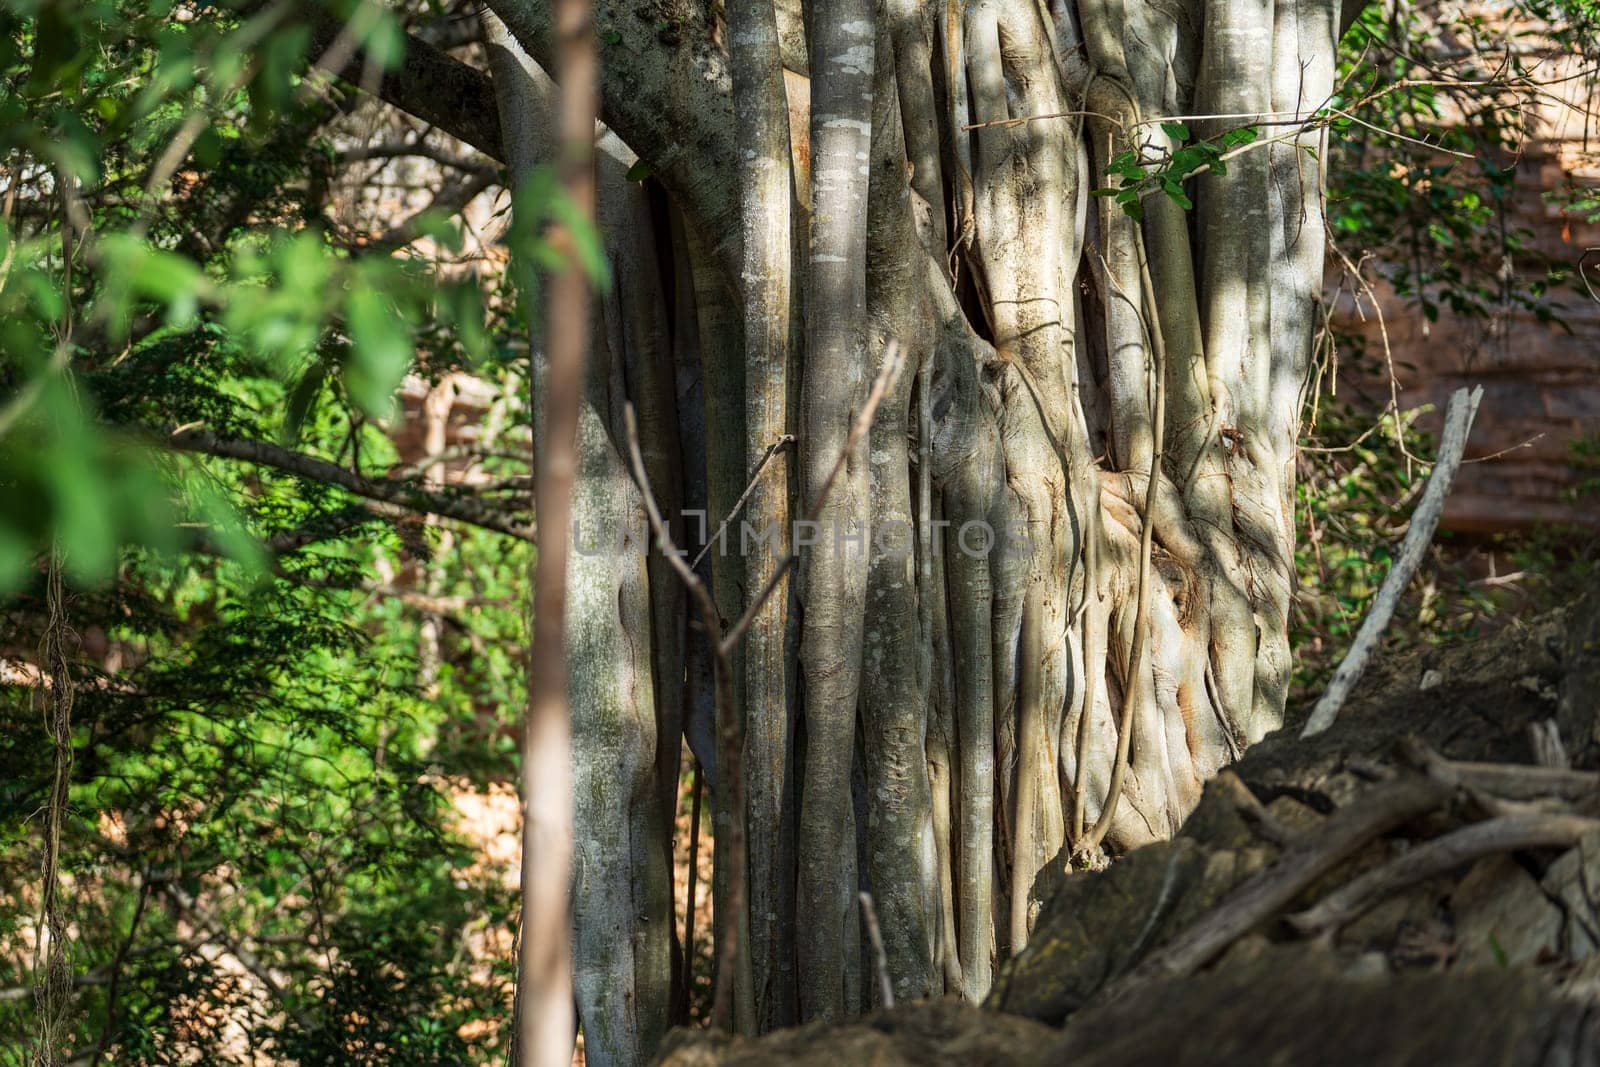 Majestic Banyan Tree Trunk in a Lush Green Forest by FerradalFCG